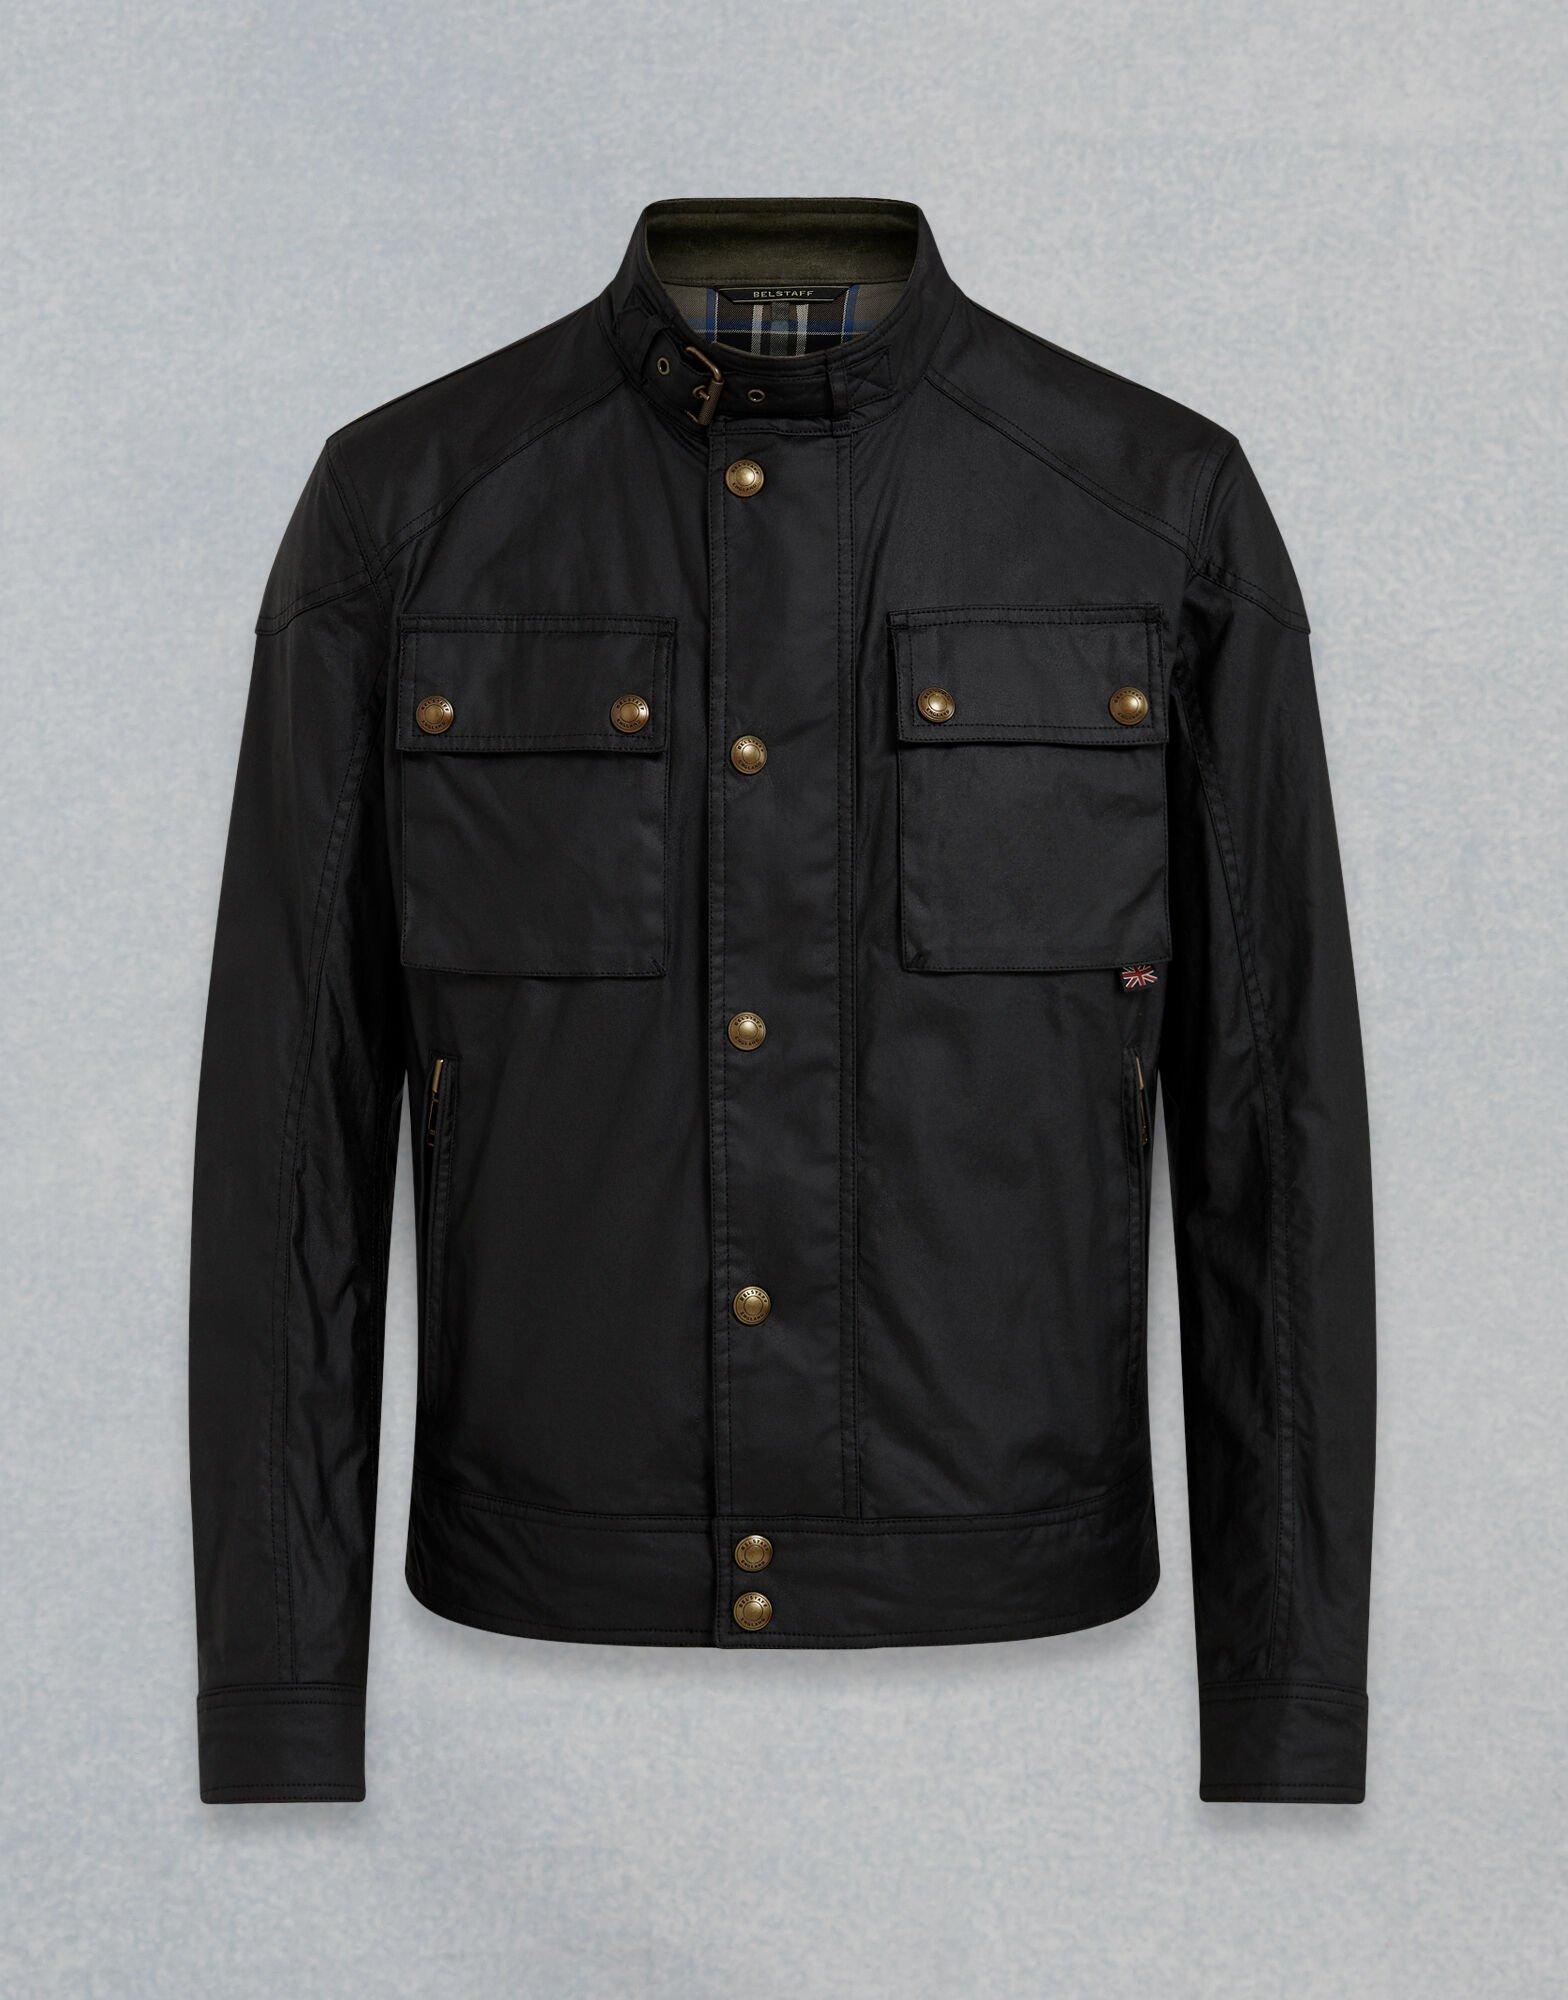 Belstaff Cotton Racemaster Waxed Jacket in Black for Men - Lyst